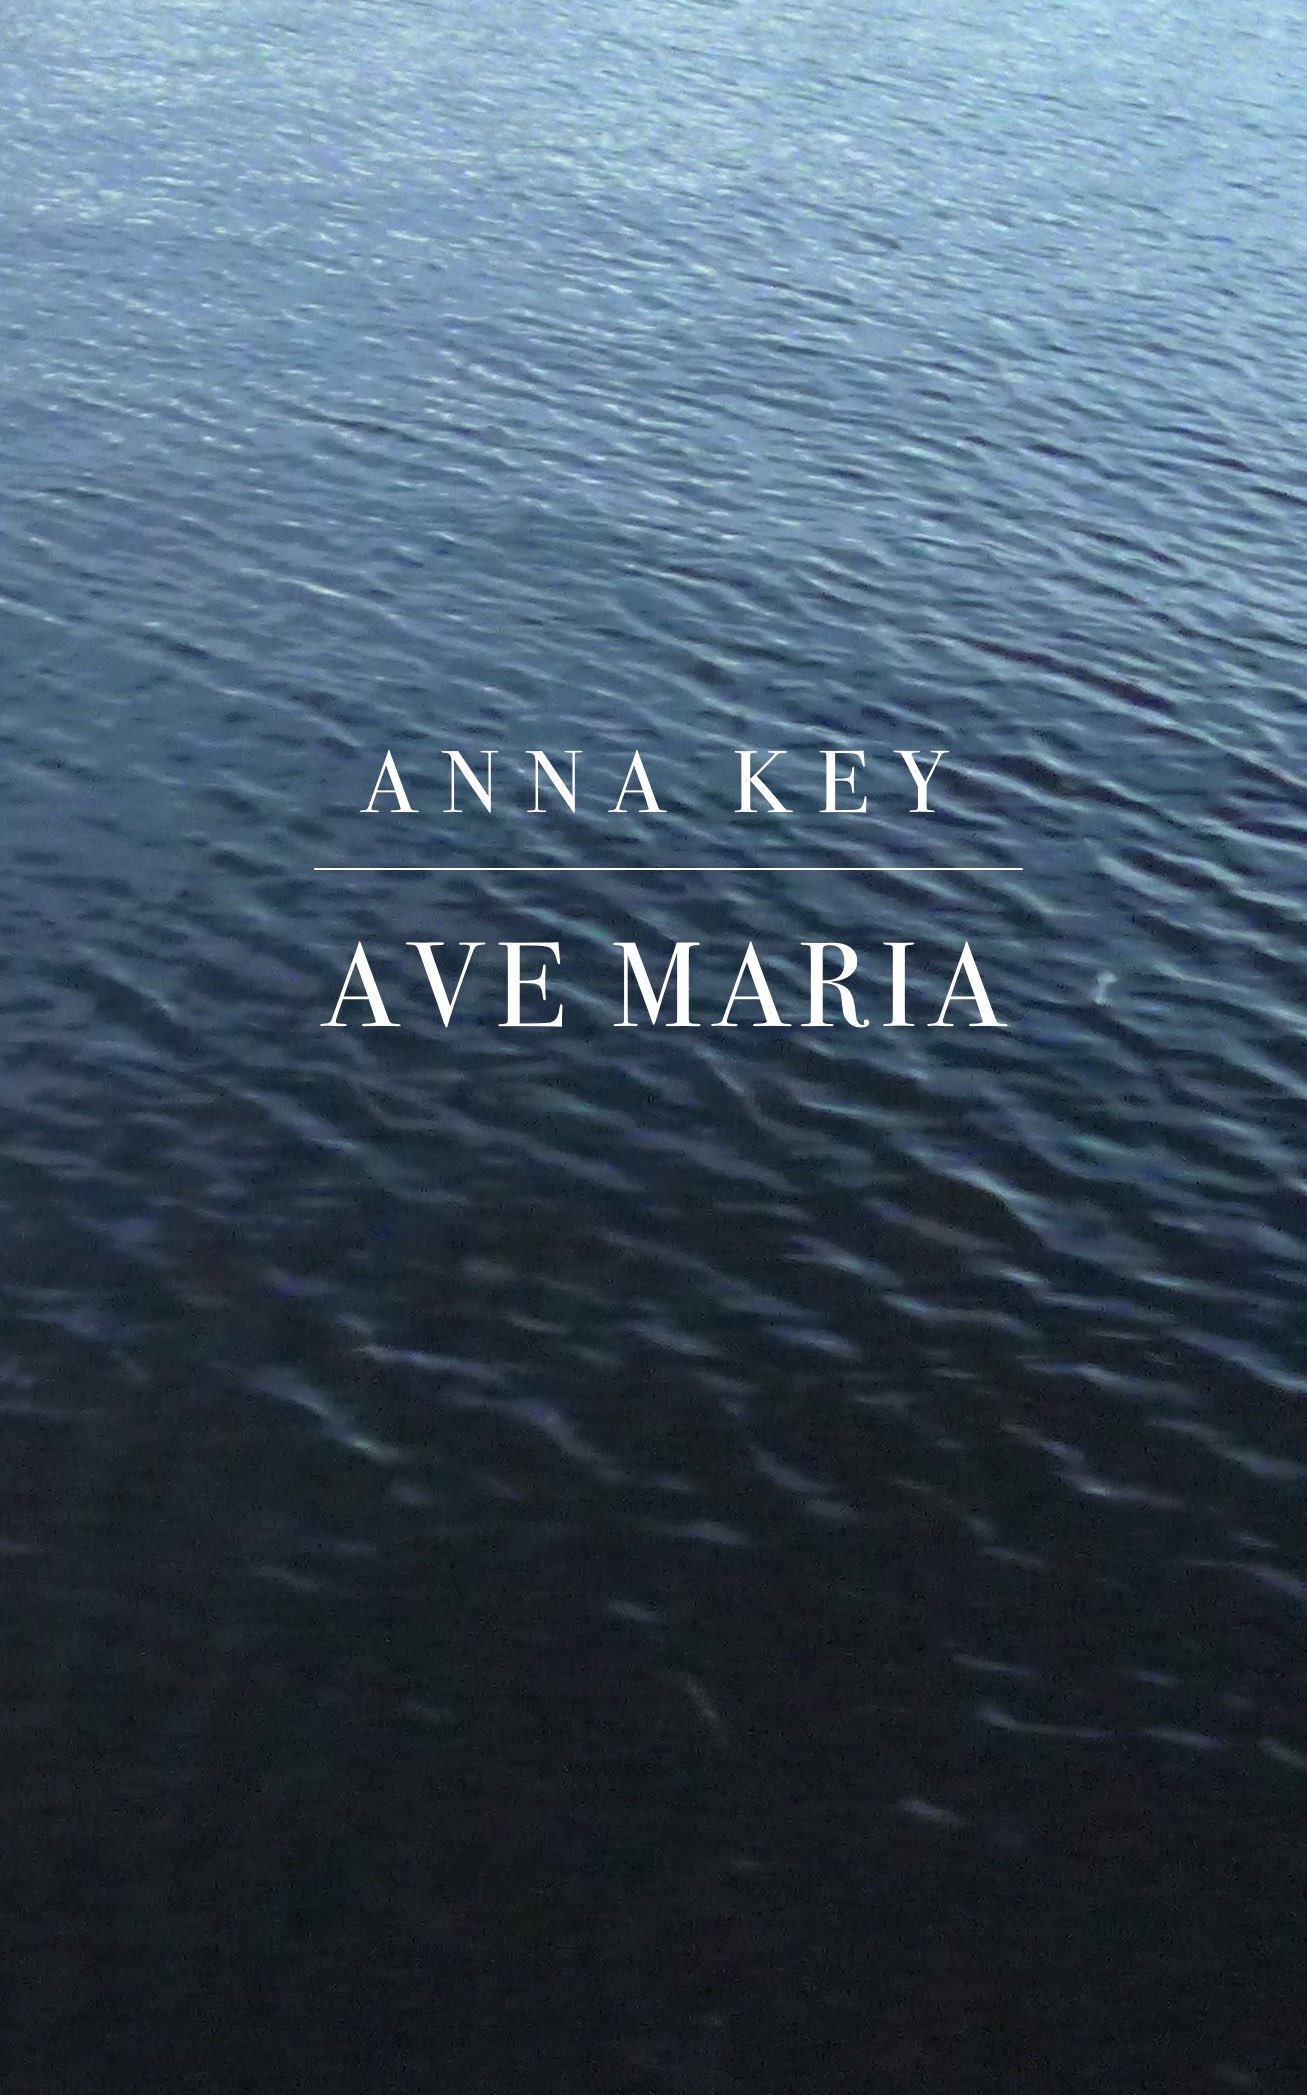 Ave Maria by Anna Key